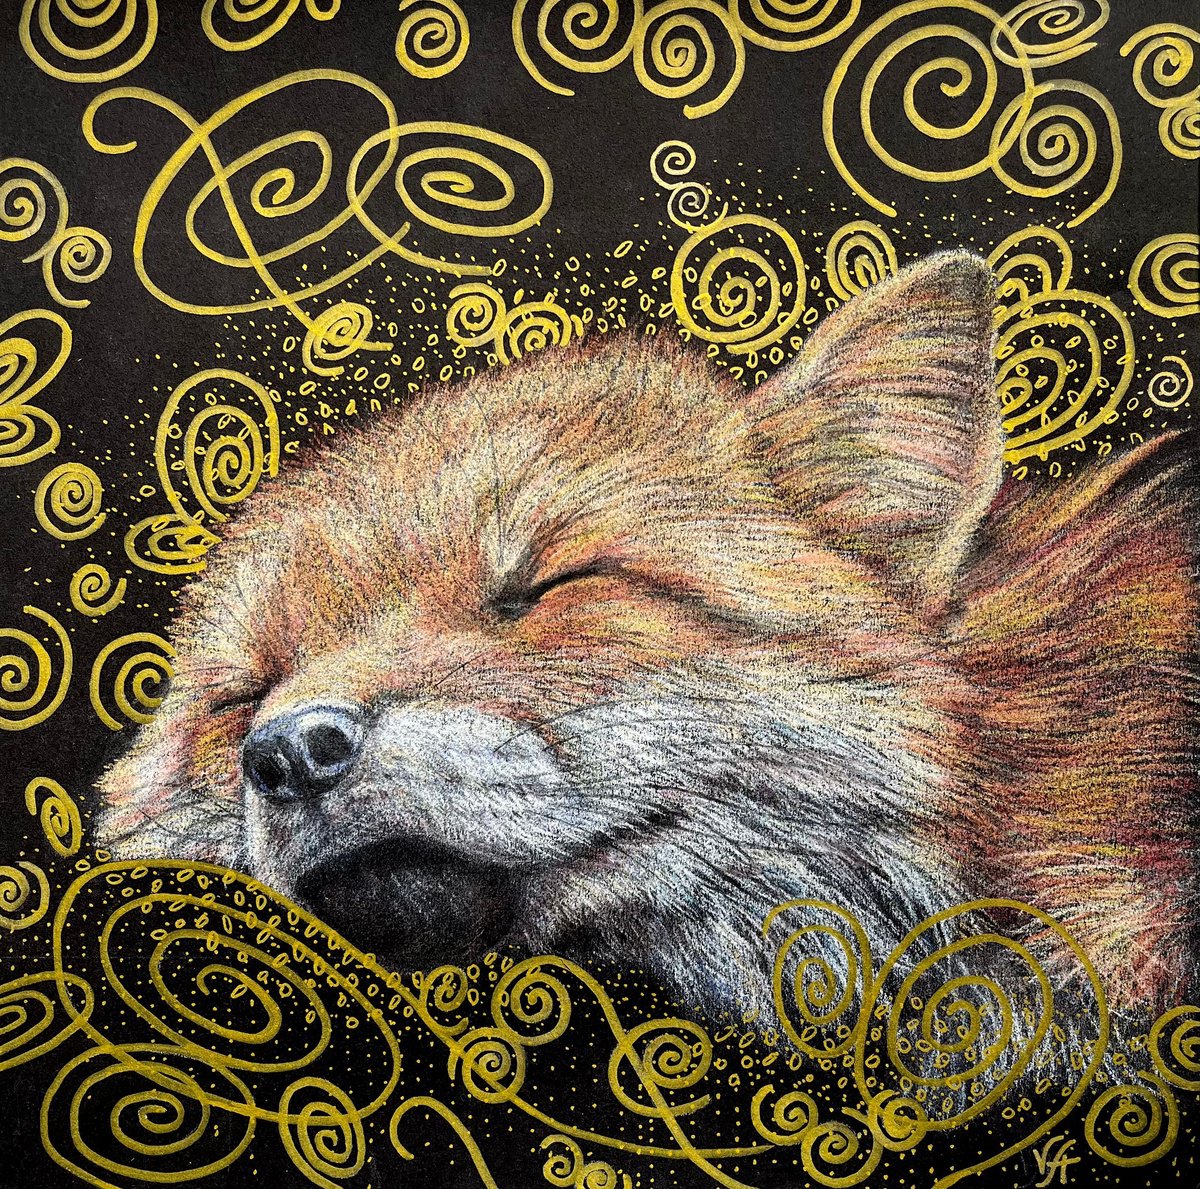 Sweet dream fox by Alona Vakhmistrova